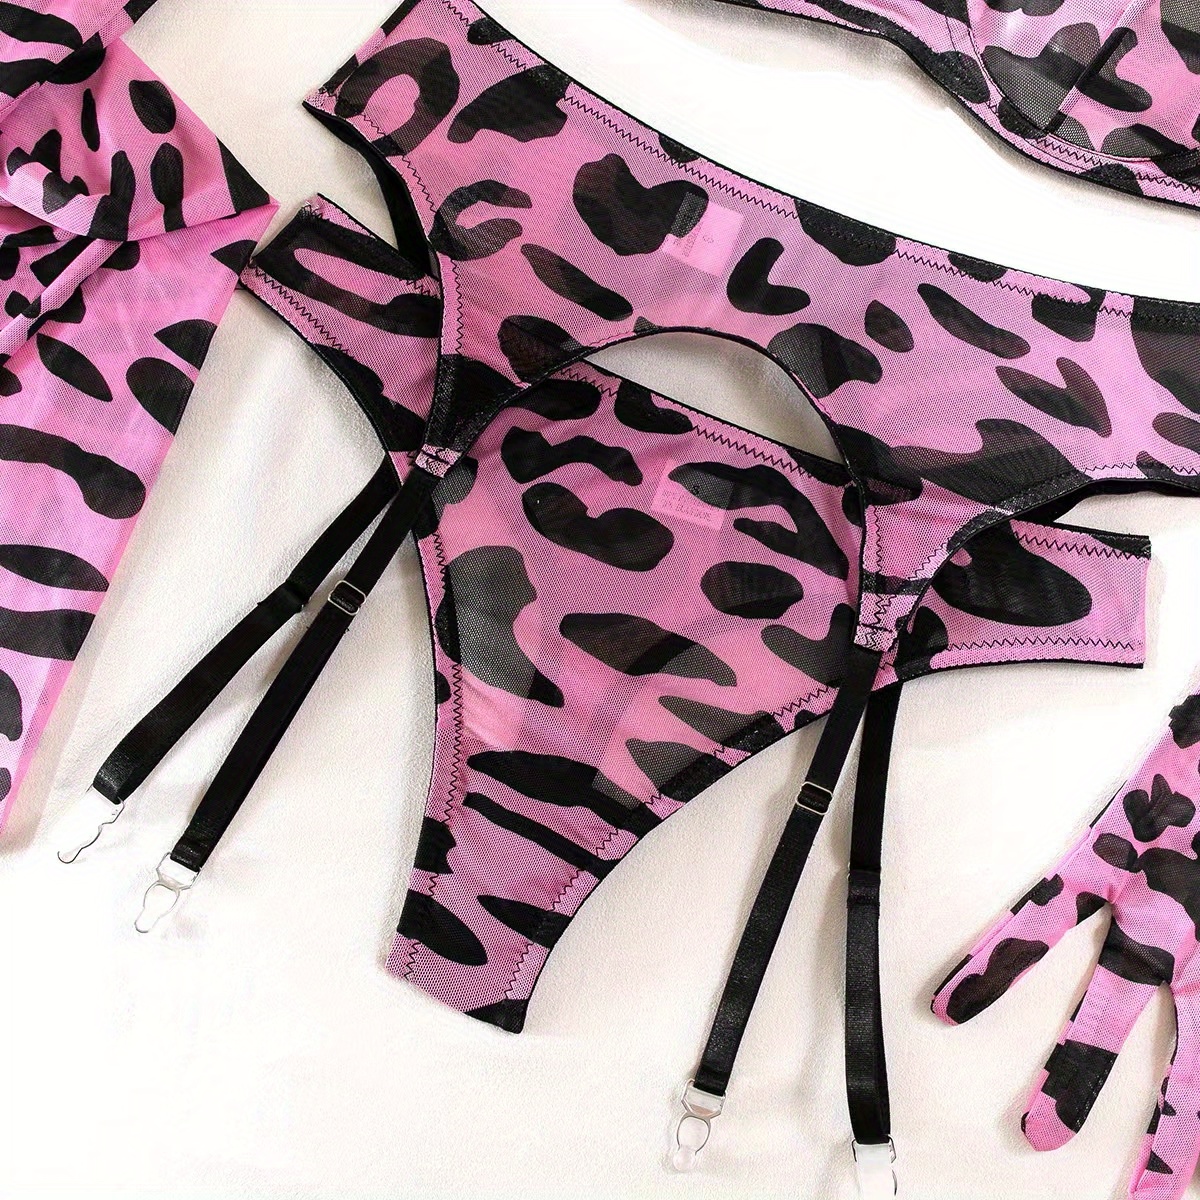 Lace Trim Leopard Lingerie Set, Hollow Out Push Up Bra & Garter Belt Thong,  Women's Sexy Lingerie & Underwear